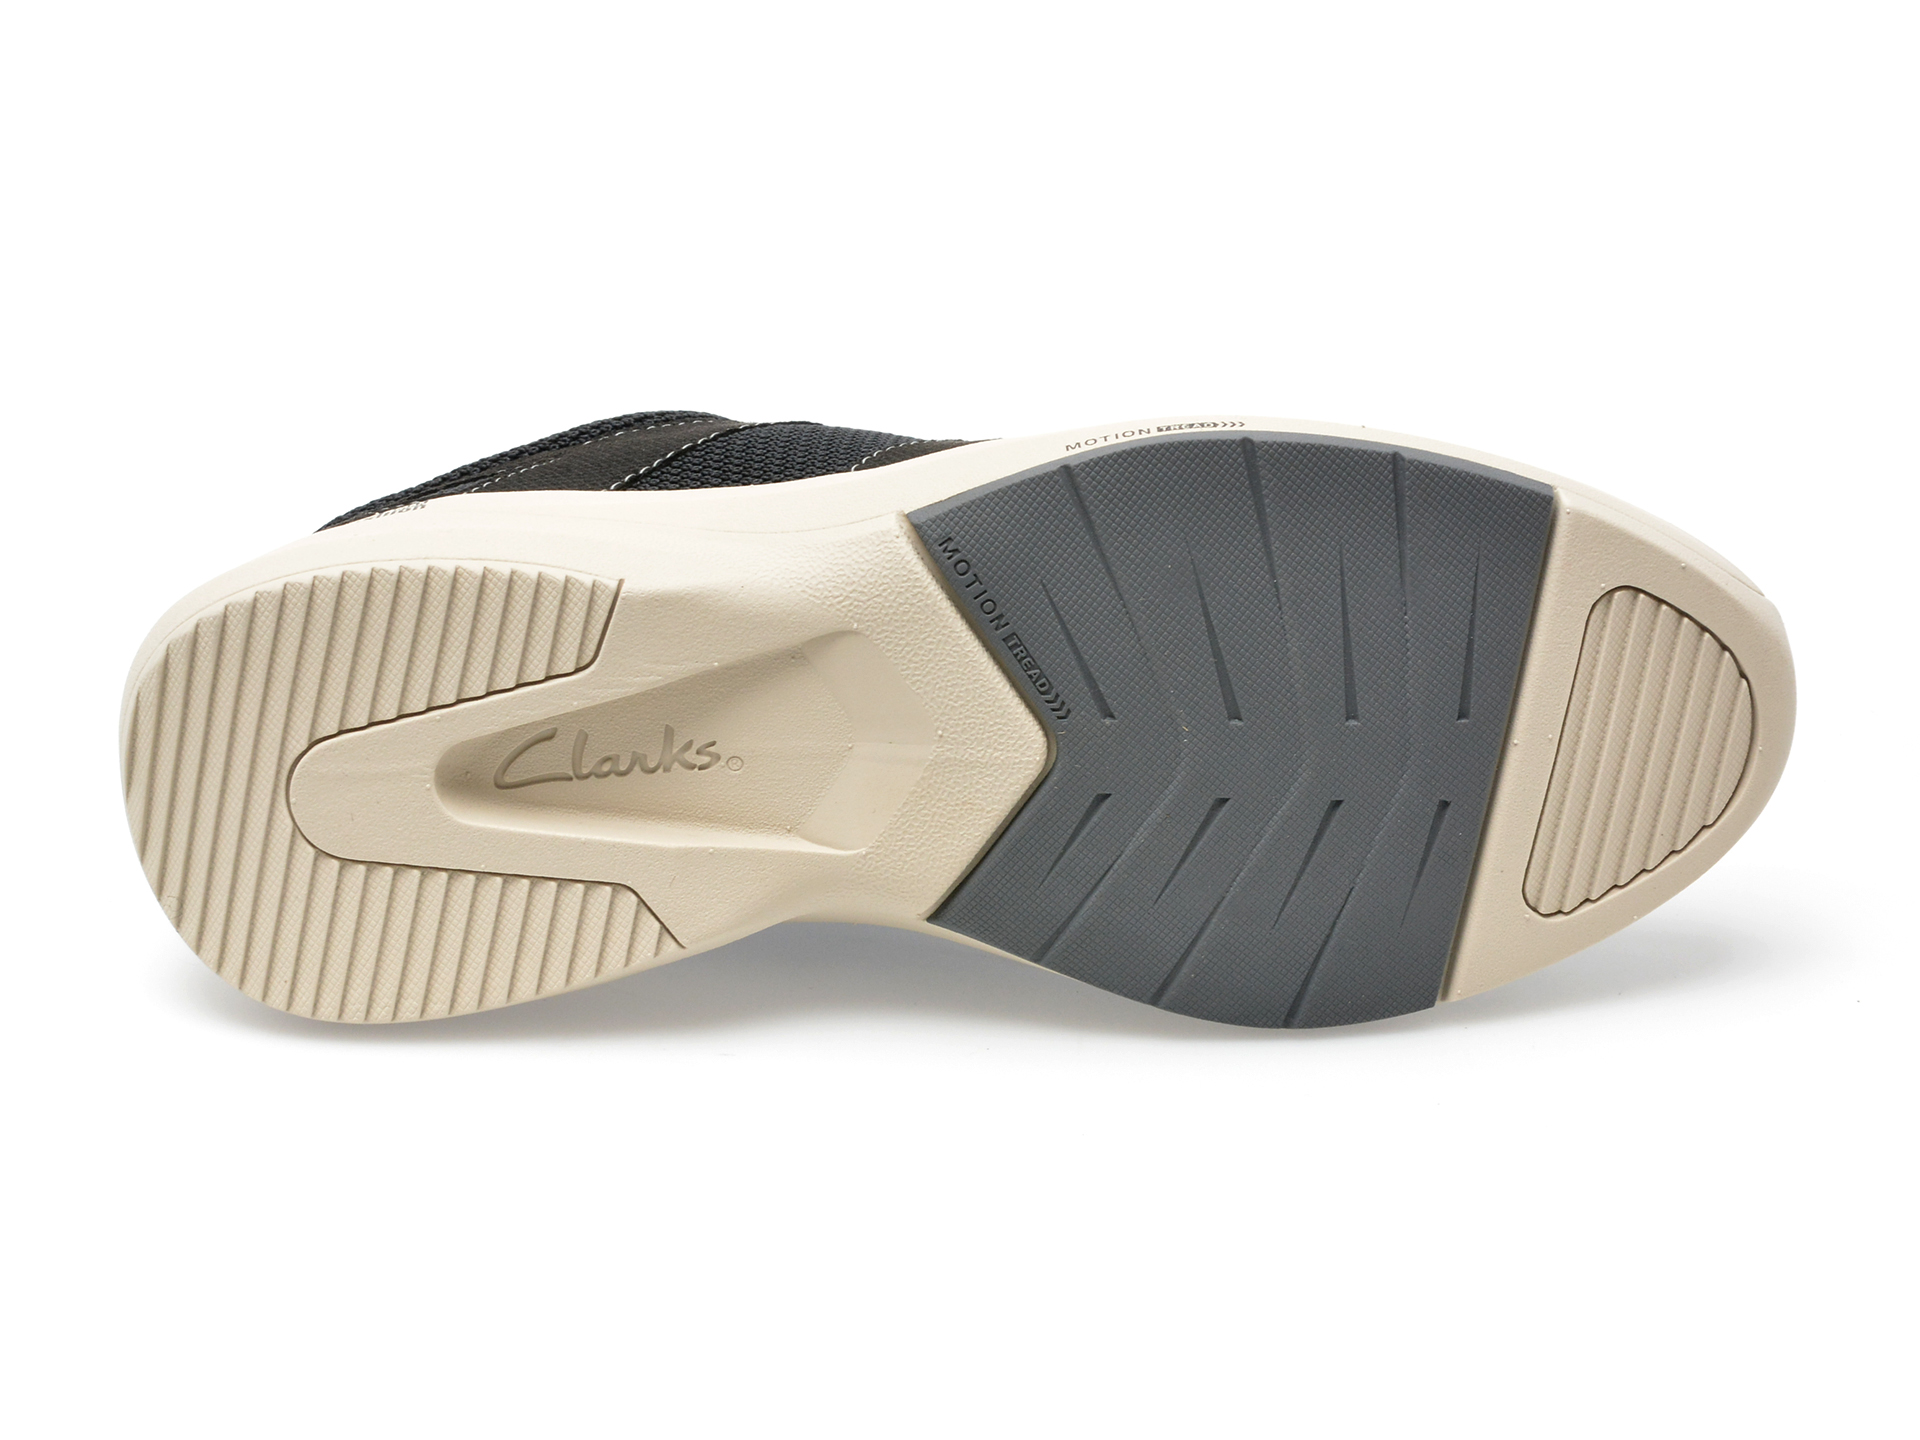 Pantofi sport CLARKS bleumarin, LEHMAN TIE 0912, din material textil